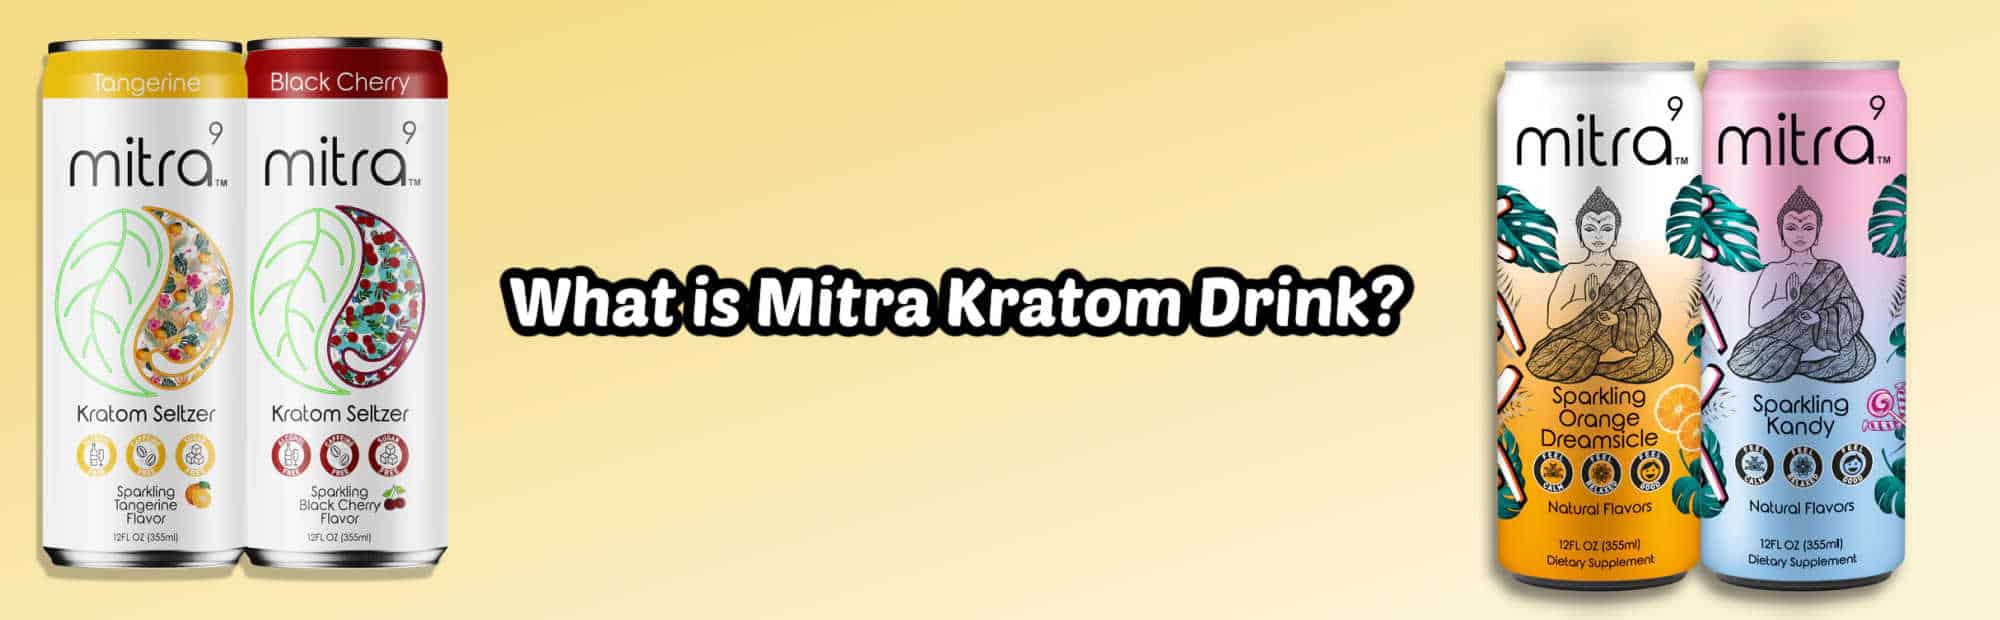 image of what is mitra kratom drink